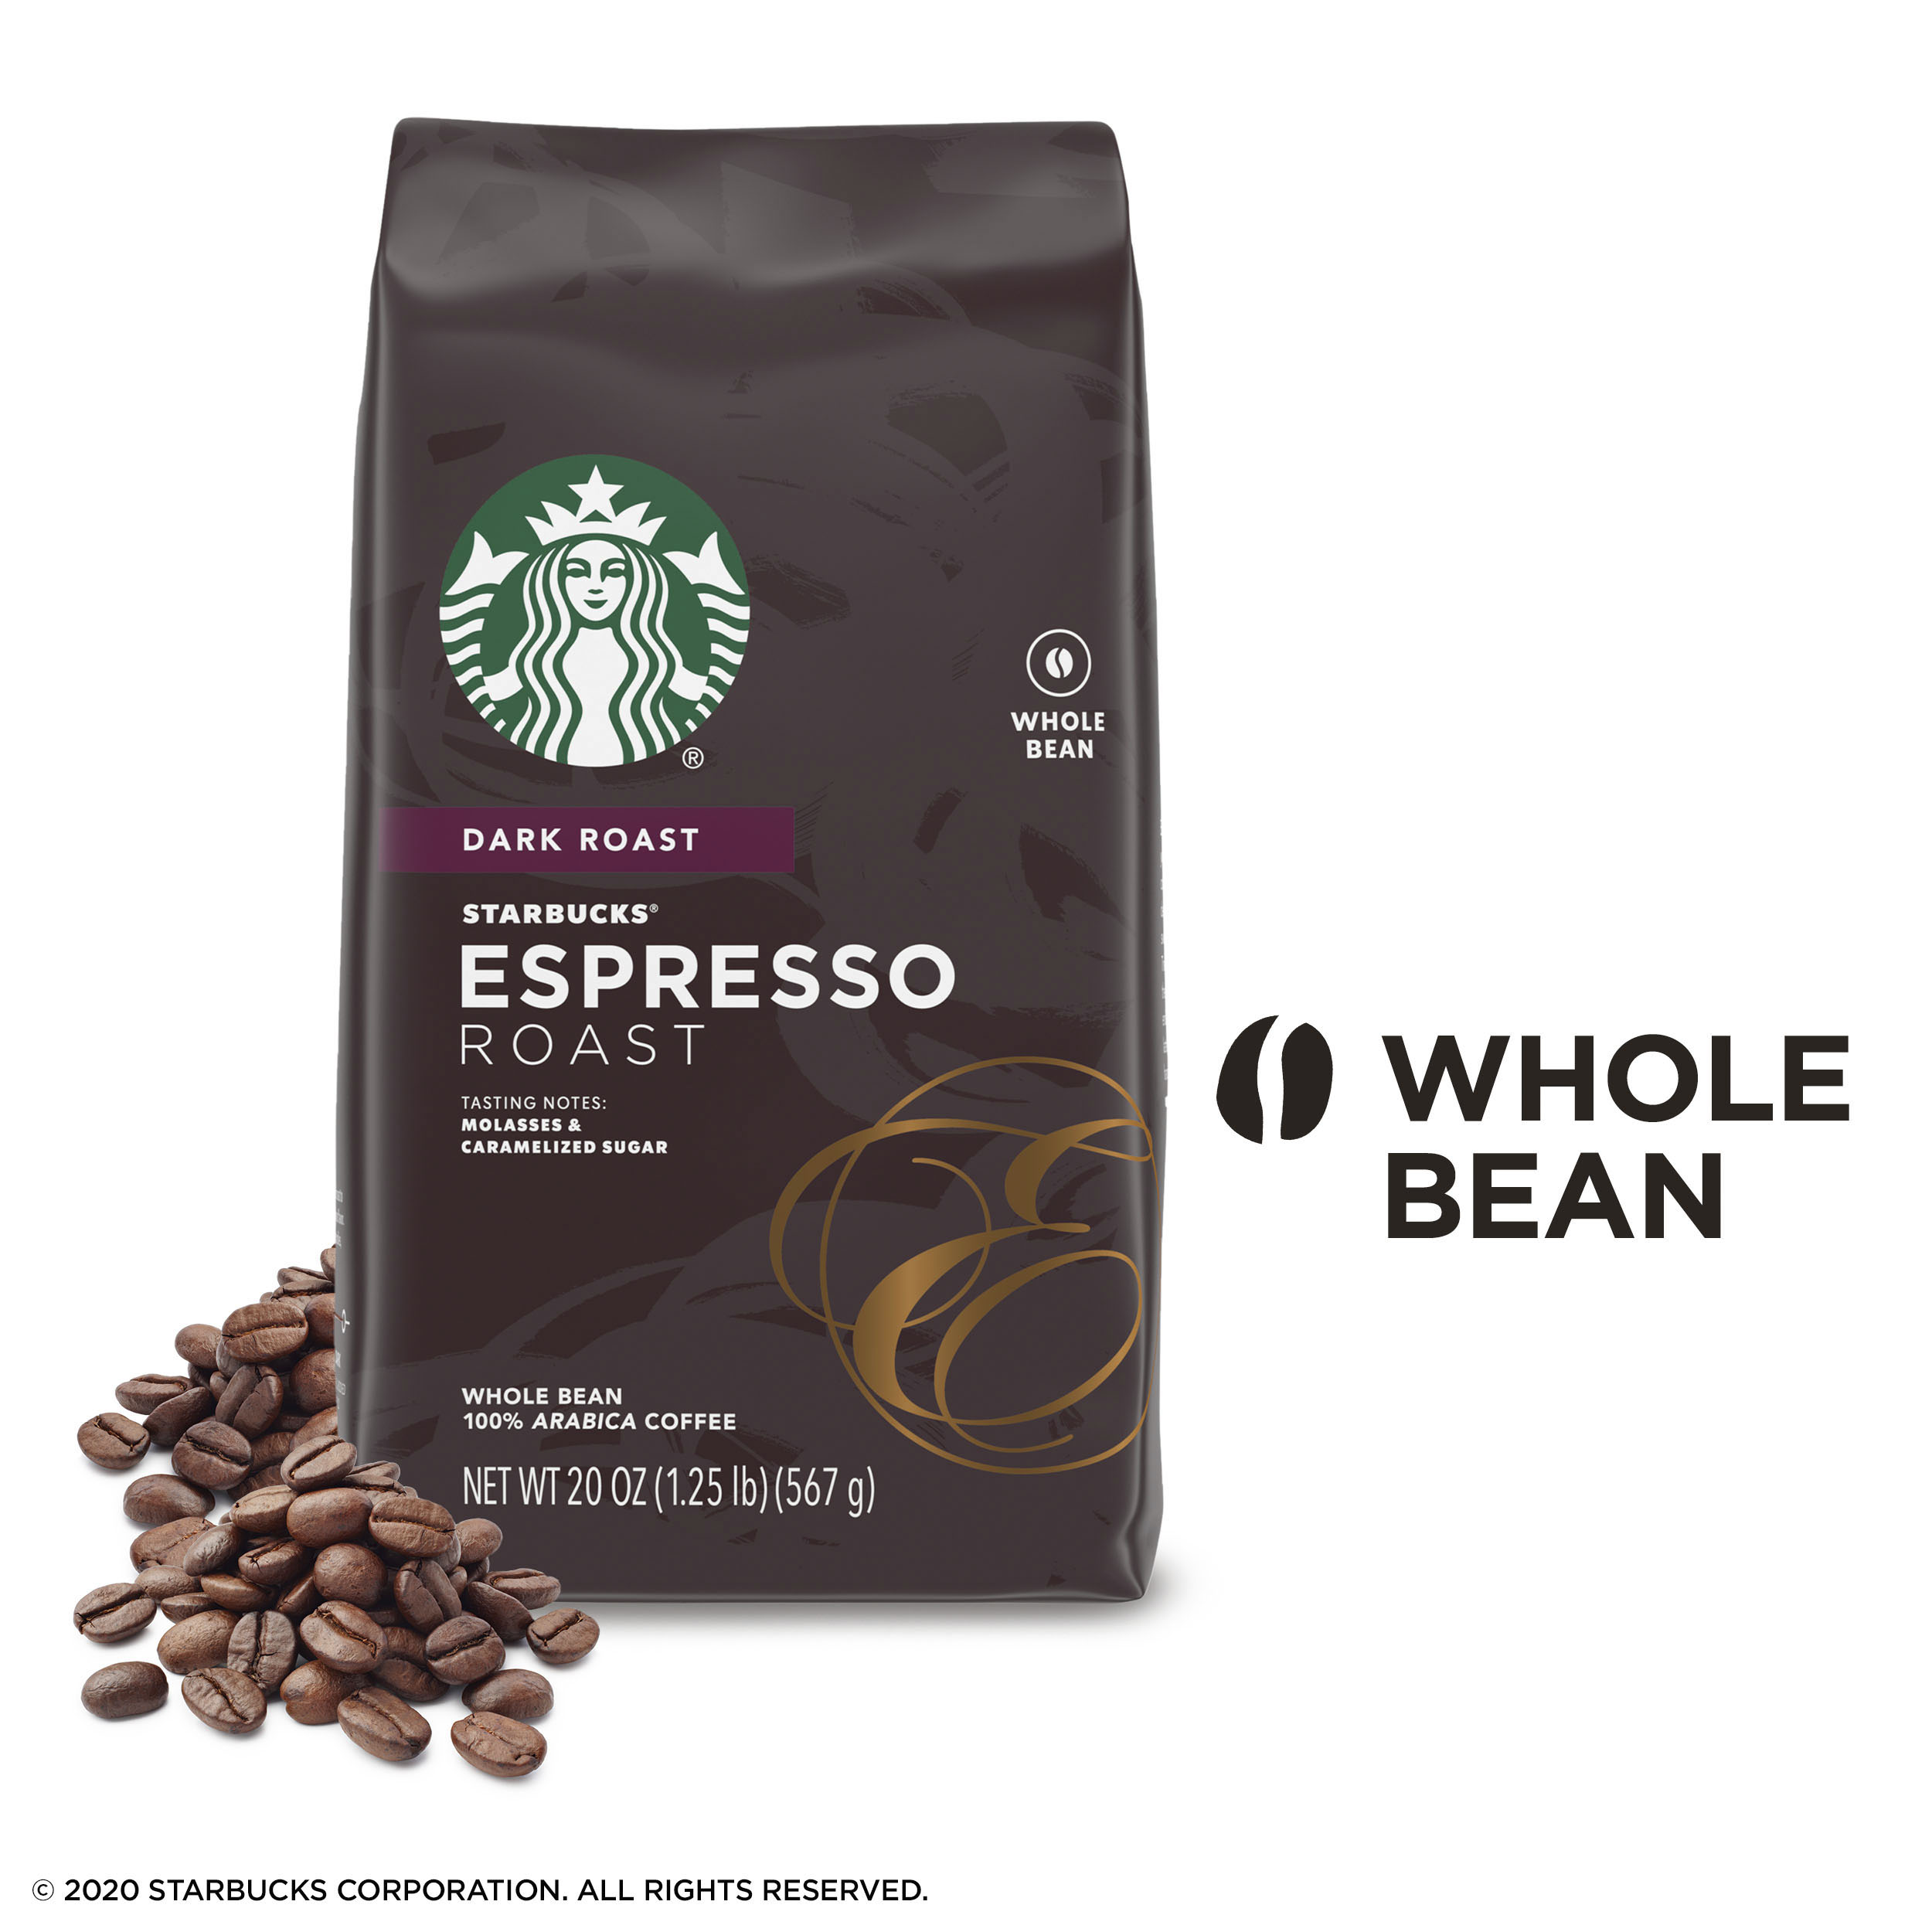 Starbucks Espresso Dark Roast Whole Bean Coffee, 20 Oz, Bag - image 3 of 6